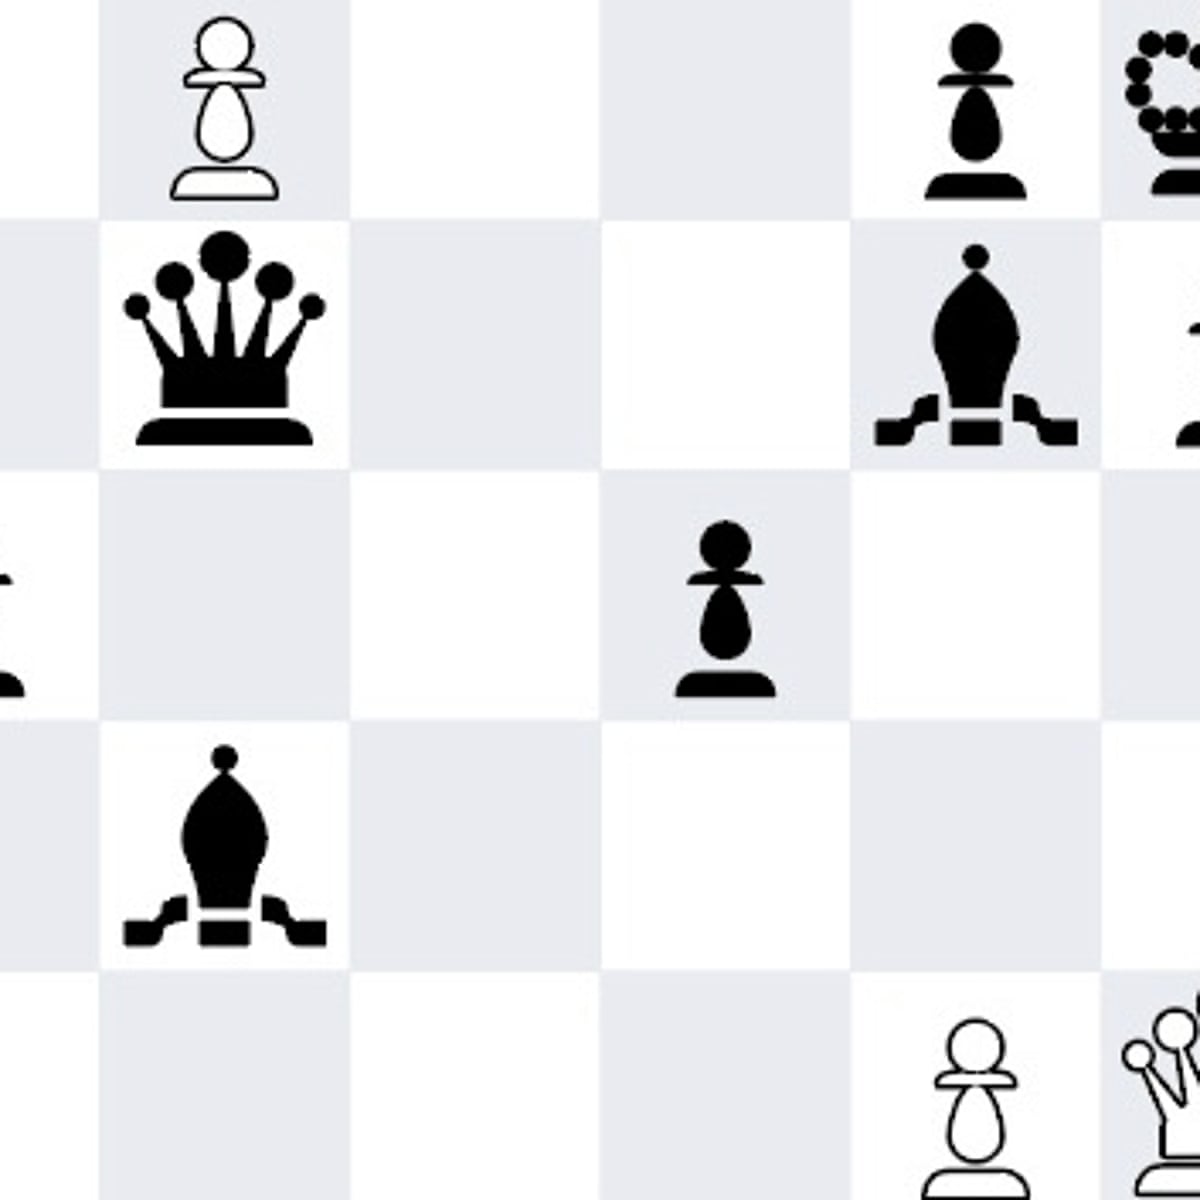 GM Nodirbek Abdusattorov wins the ChessKid Division 1 defeating GM Fabiano  Caruana : r/chess